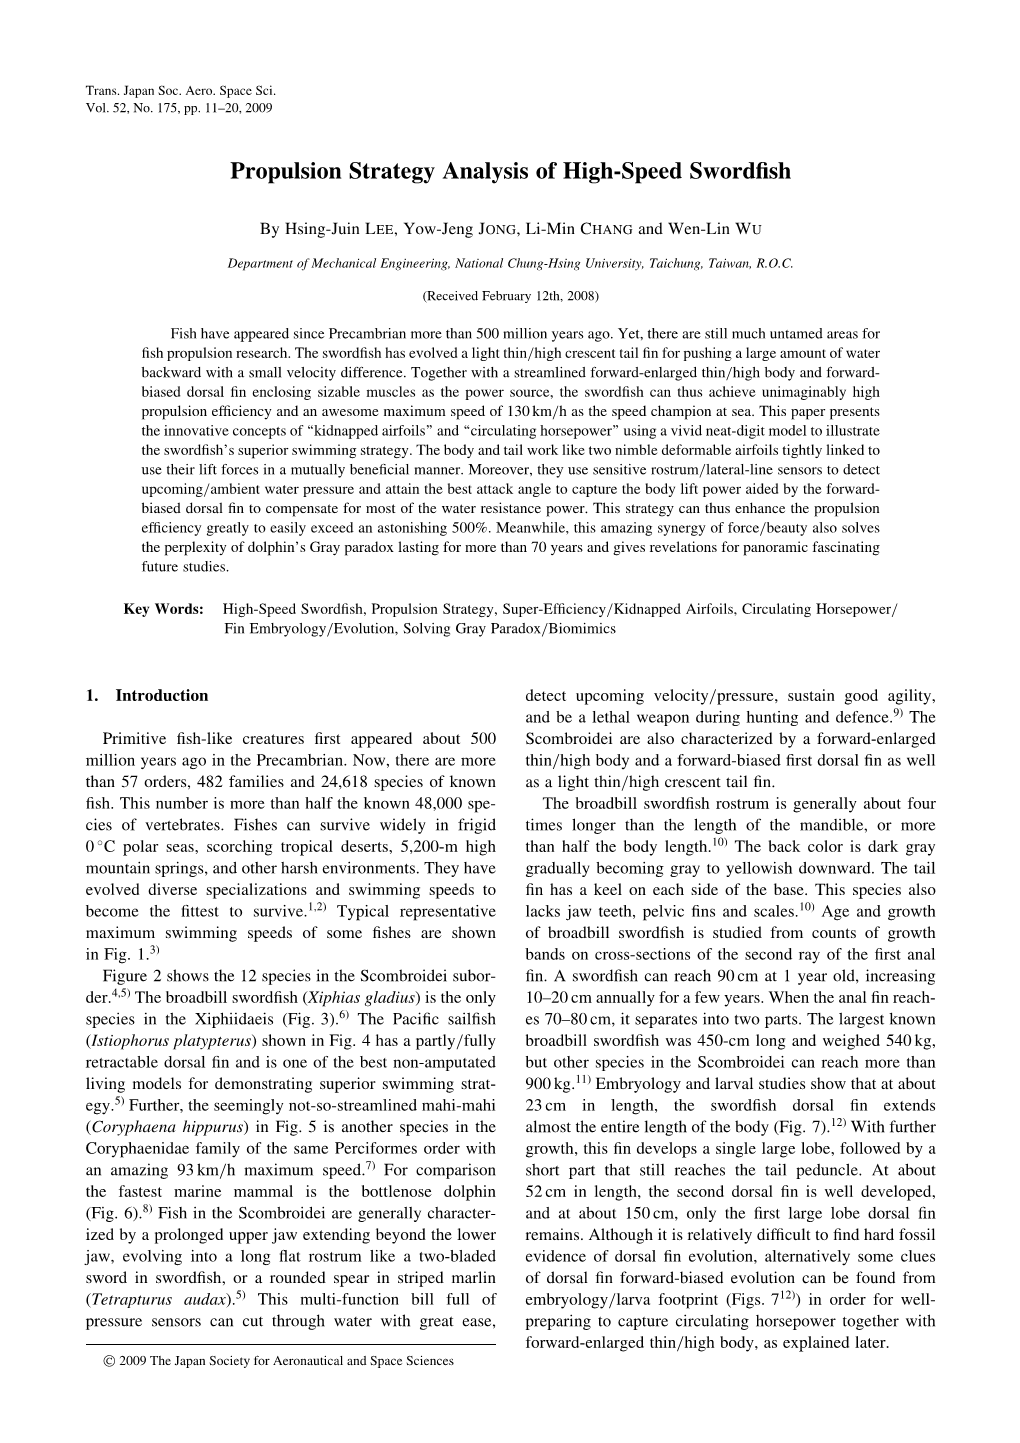 Propulsion Strategy Analysis of High-Speed Swordfish